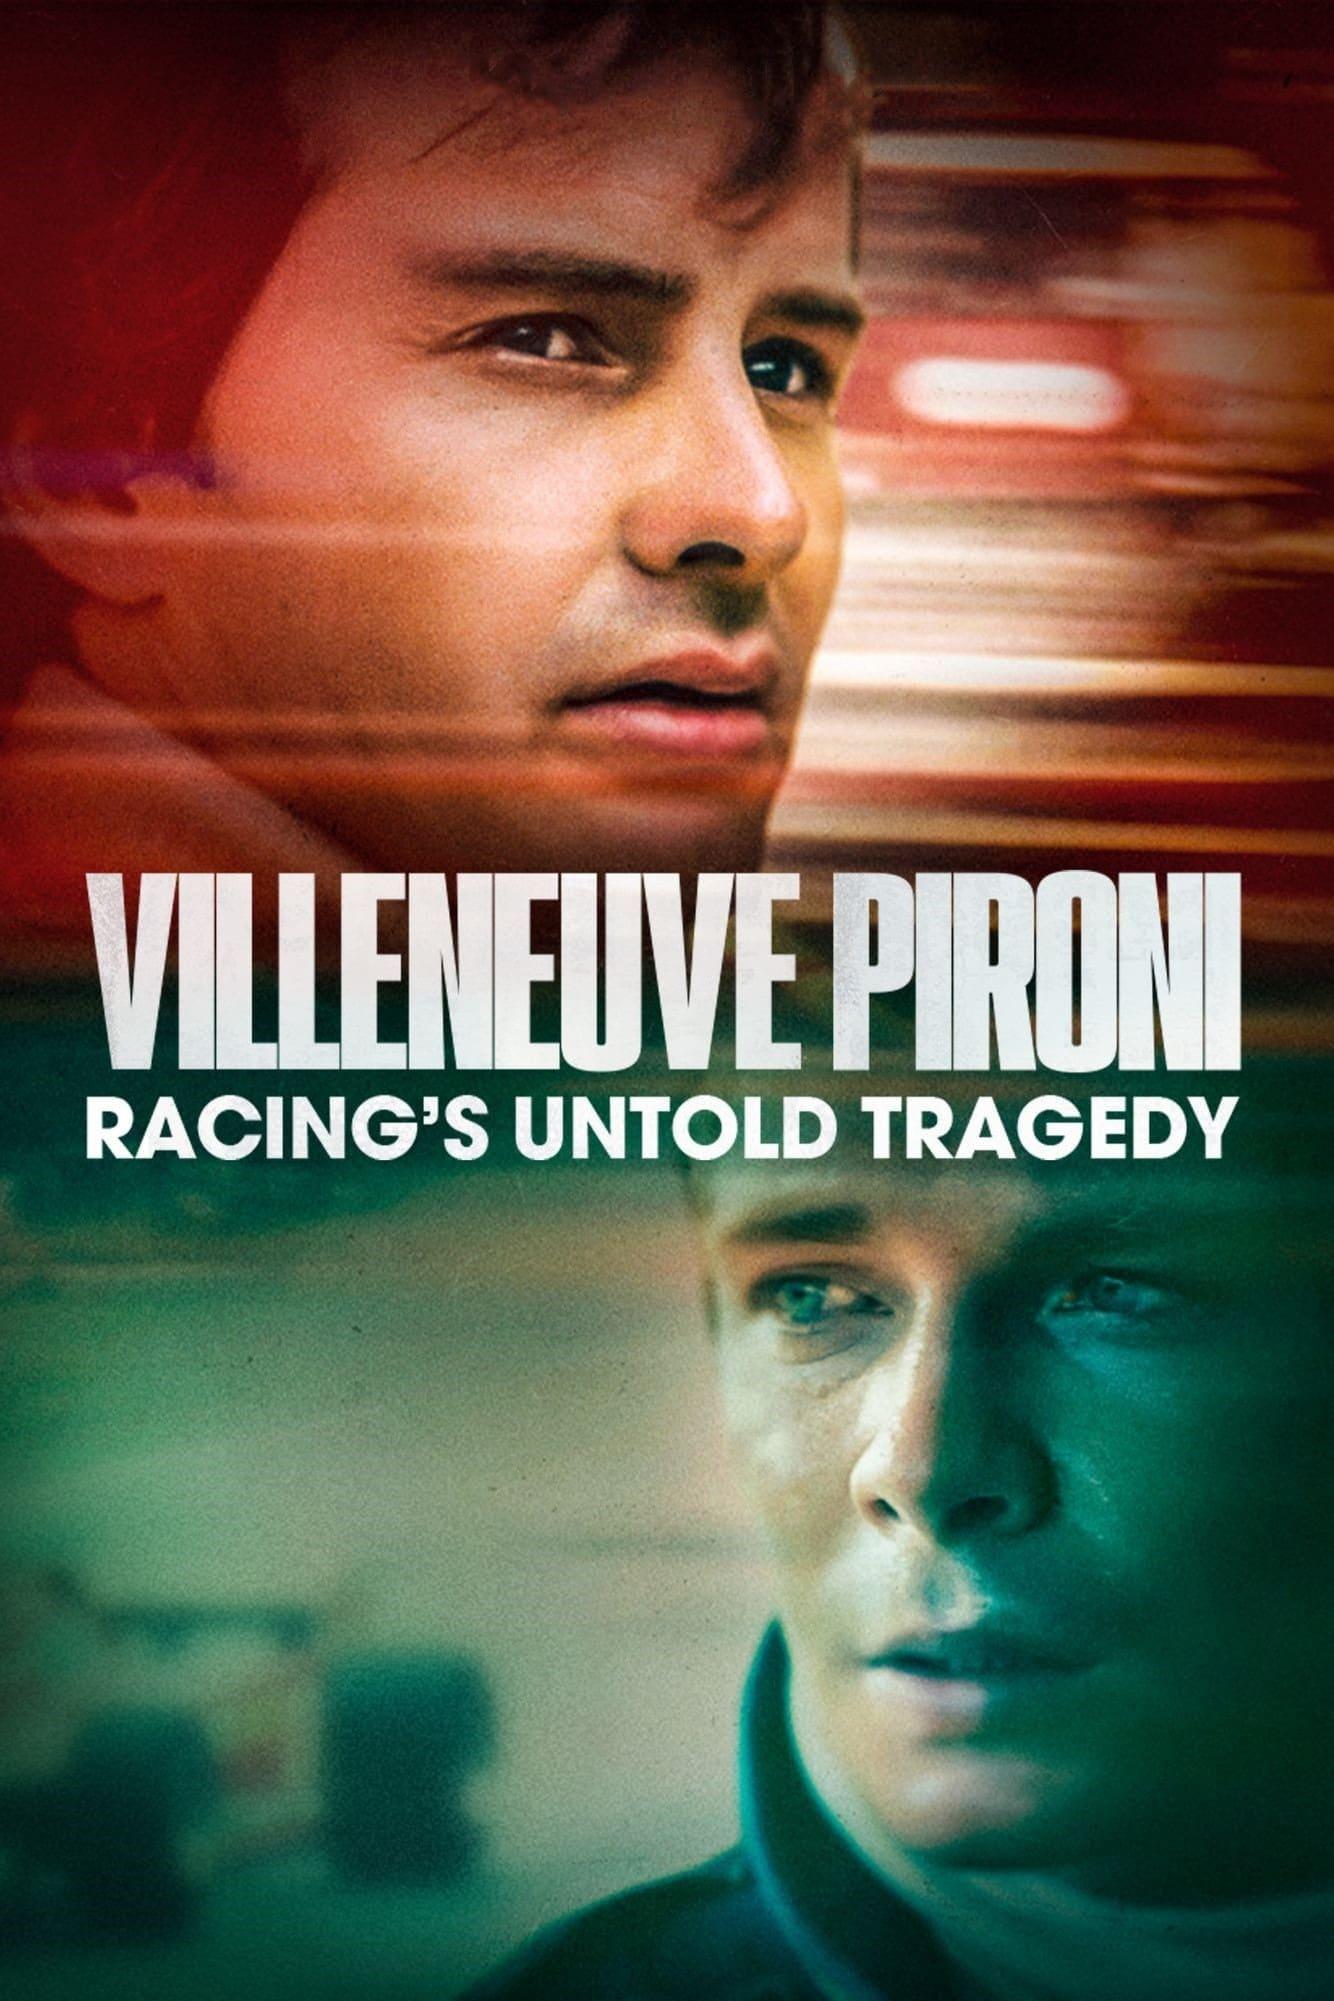 Villeneuve Pironi poster